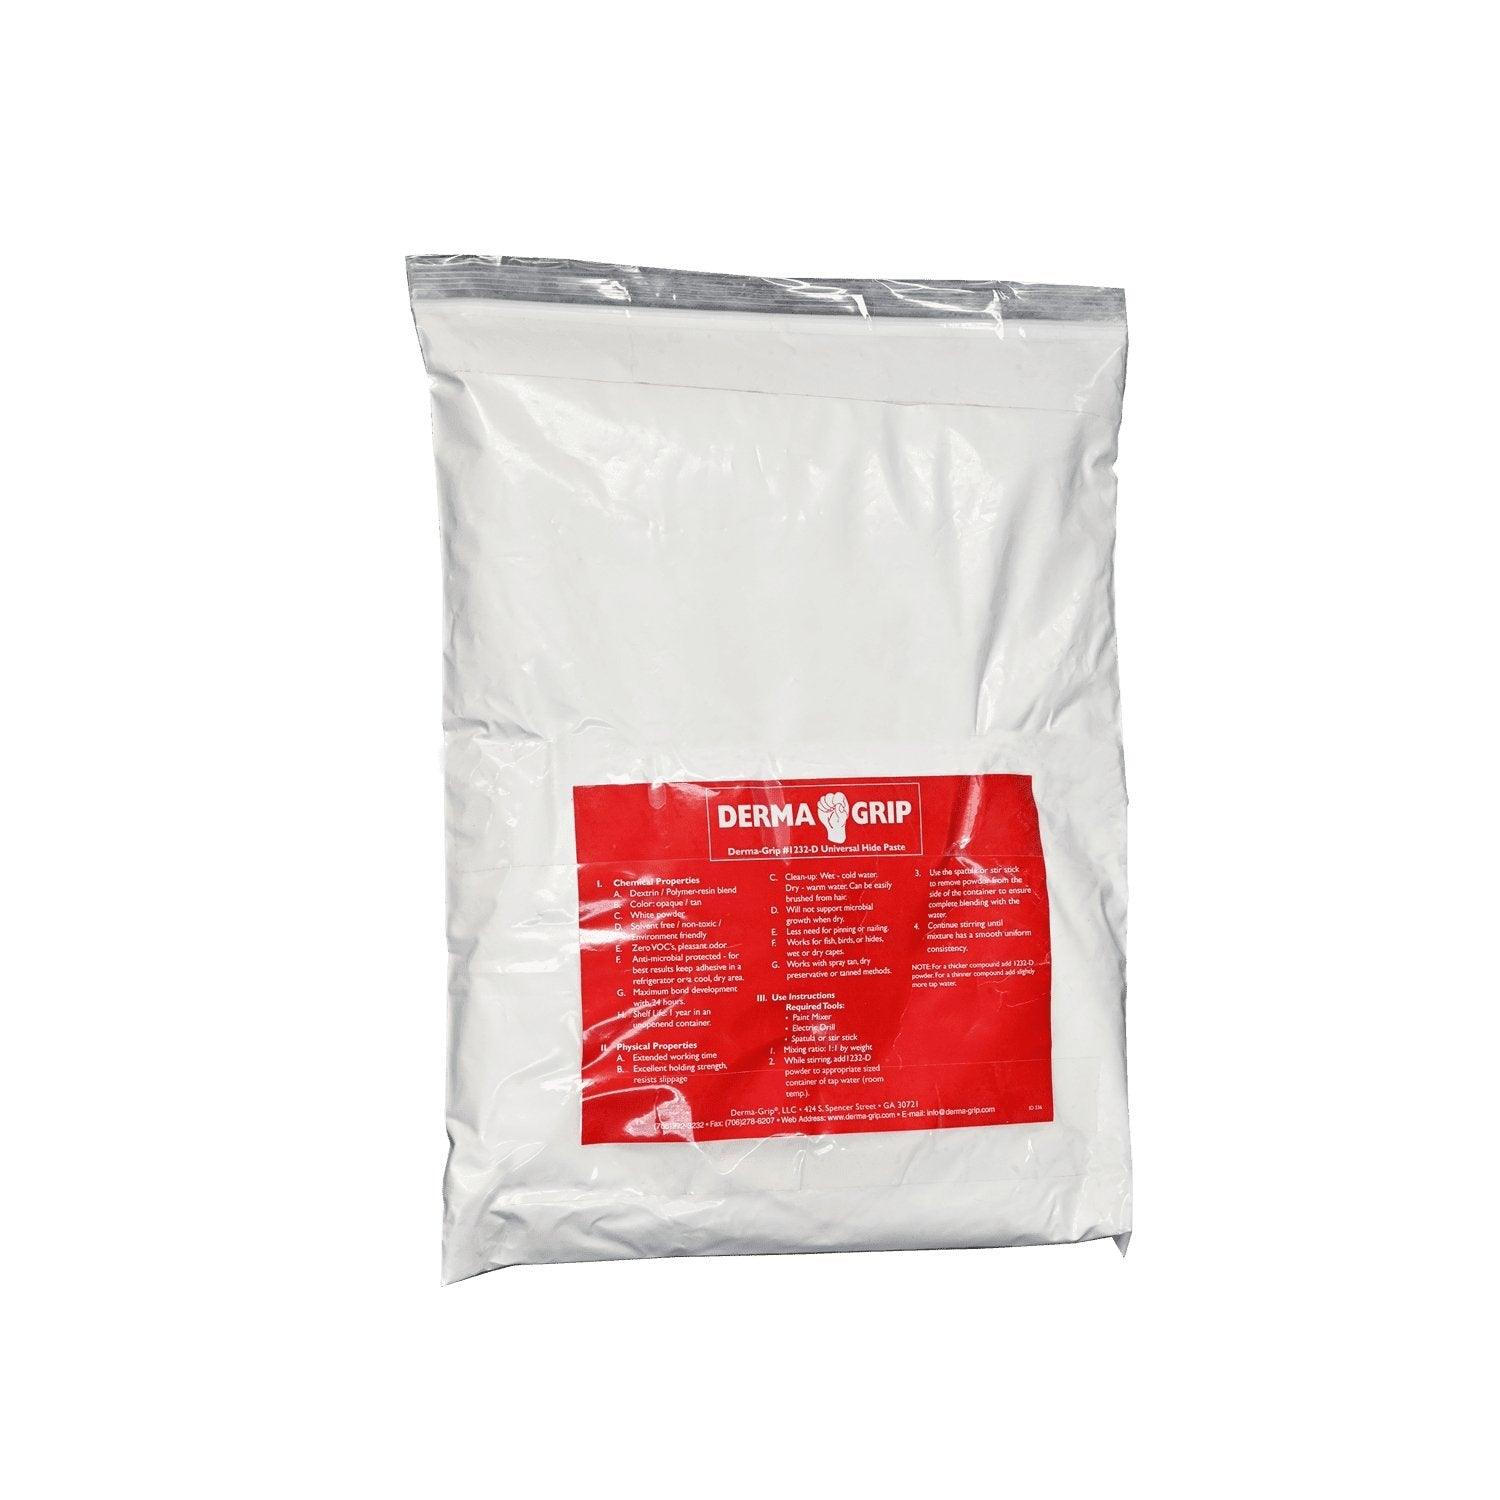 Derma Grip Powdered Hide Paste - Matuska Taxidermy Supply Company